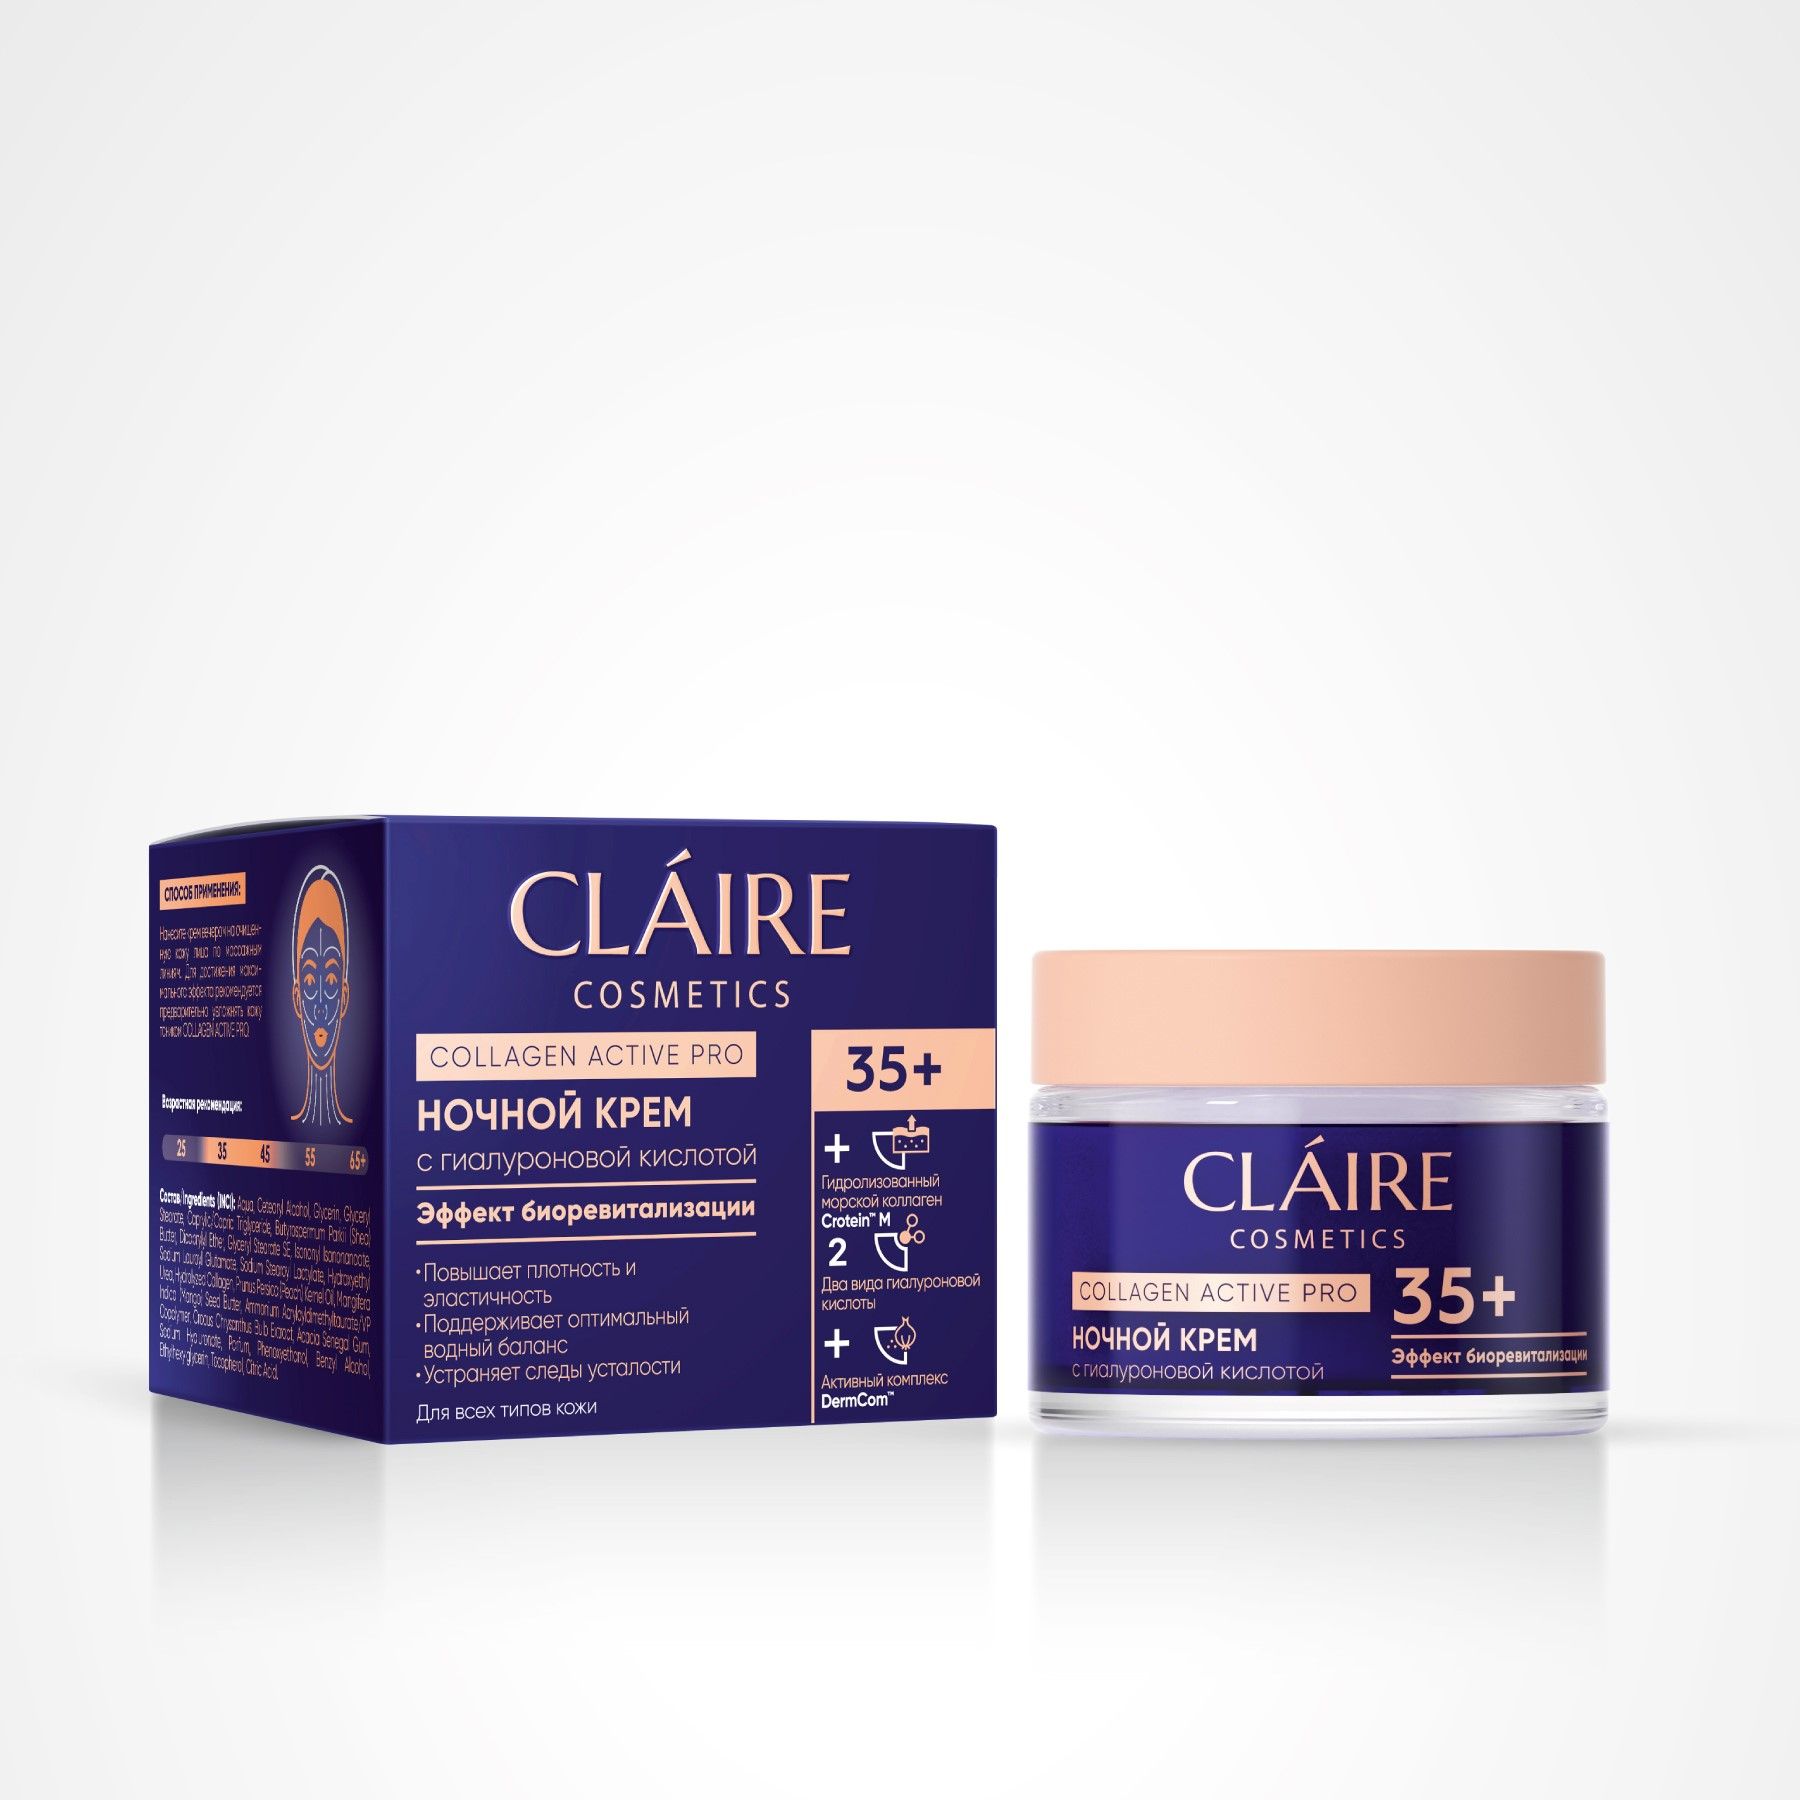 Claire Cosmetics Collagen Active Pro. Крем для лица с коллагеном 55+. Крем Claire белорусский. Dilis Collagen Active Pro. Коллаген актив отзывы